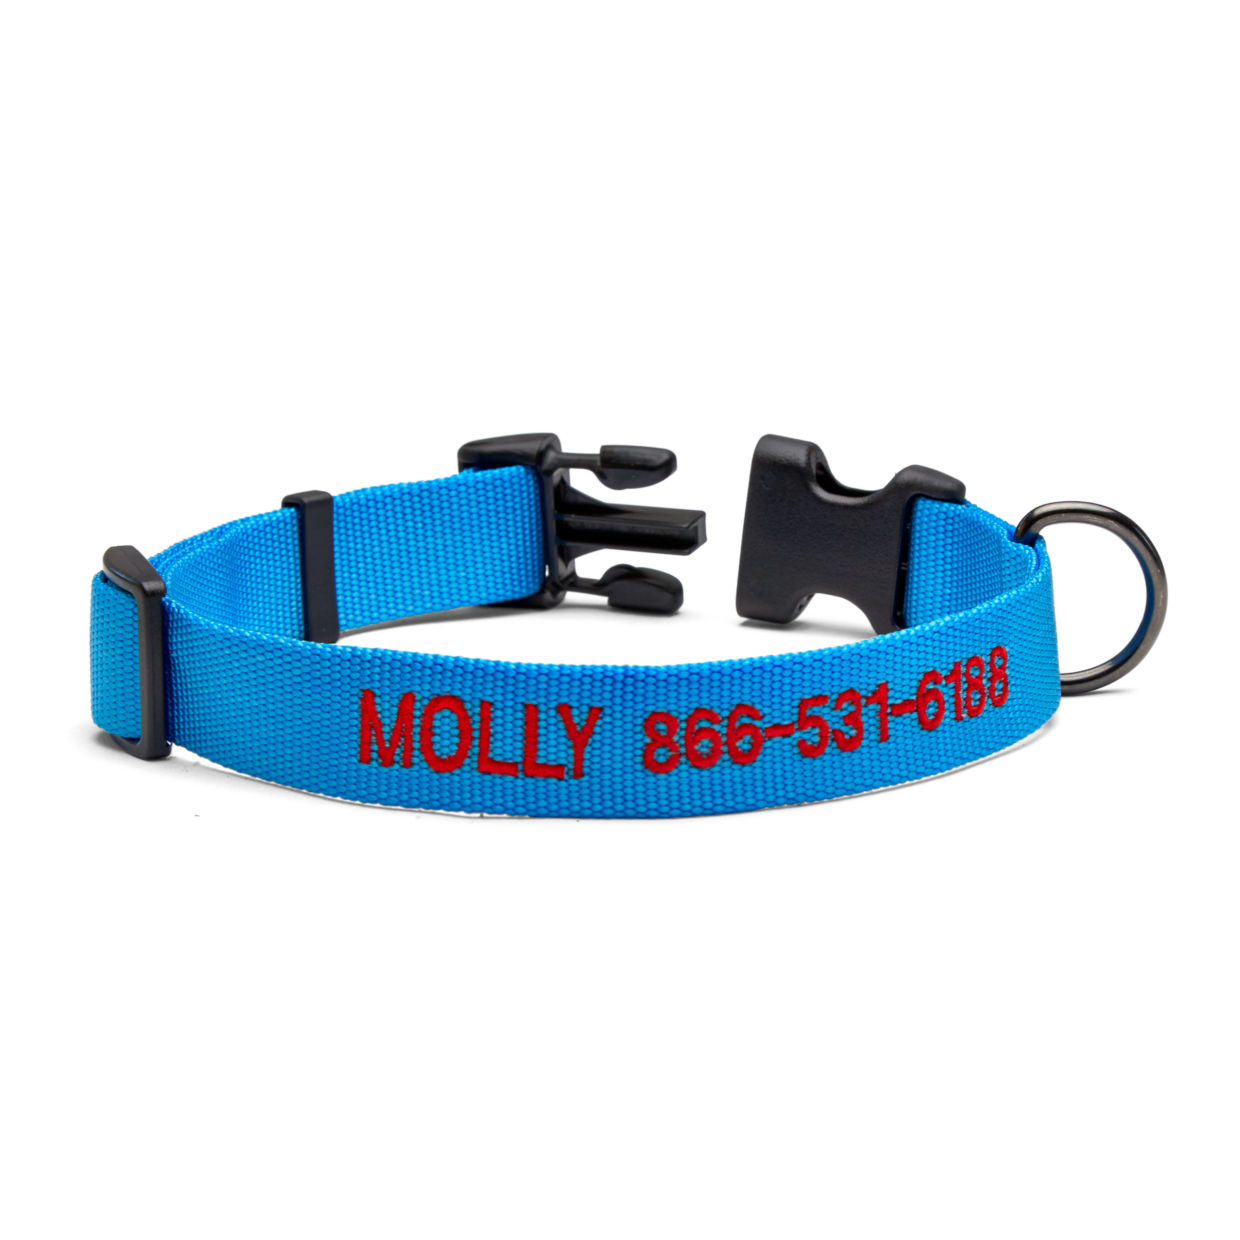 Side-Release Buckle Dog Collar